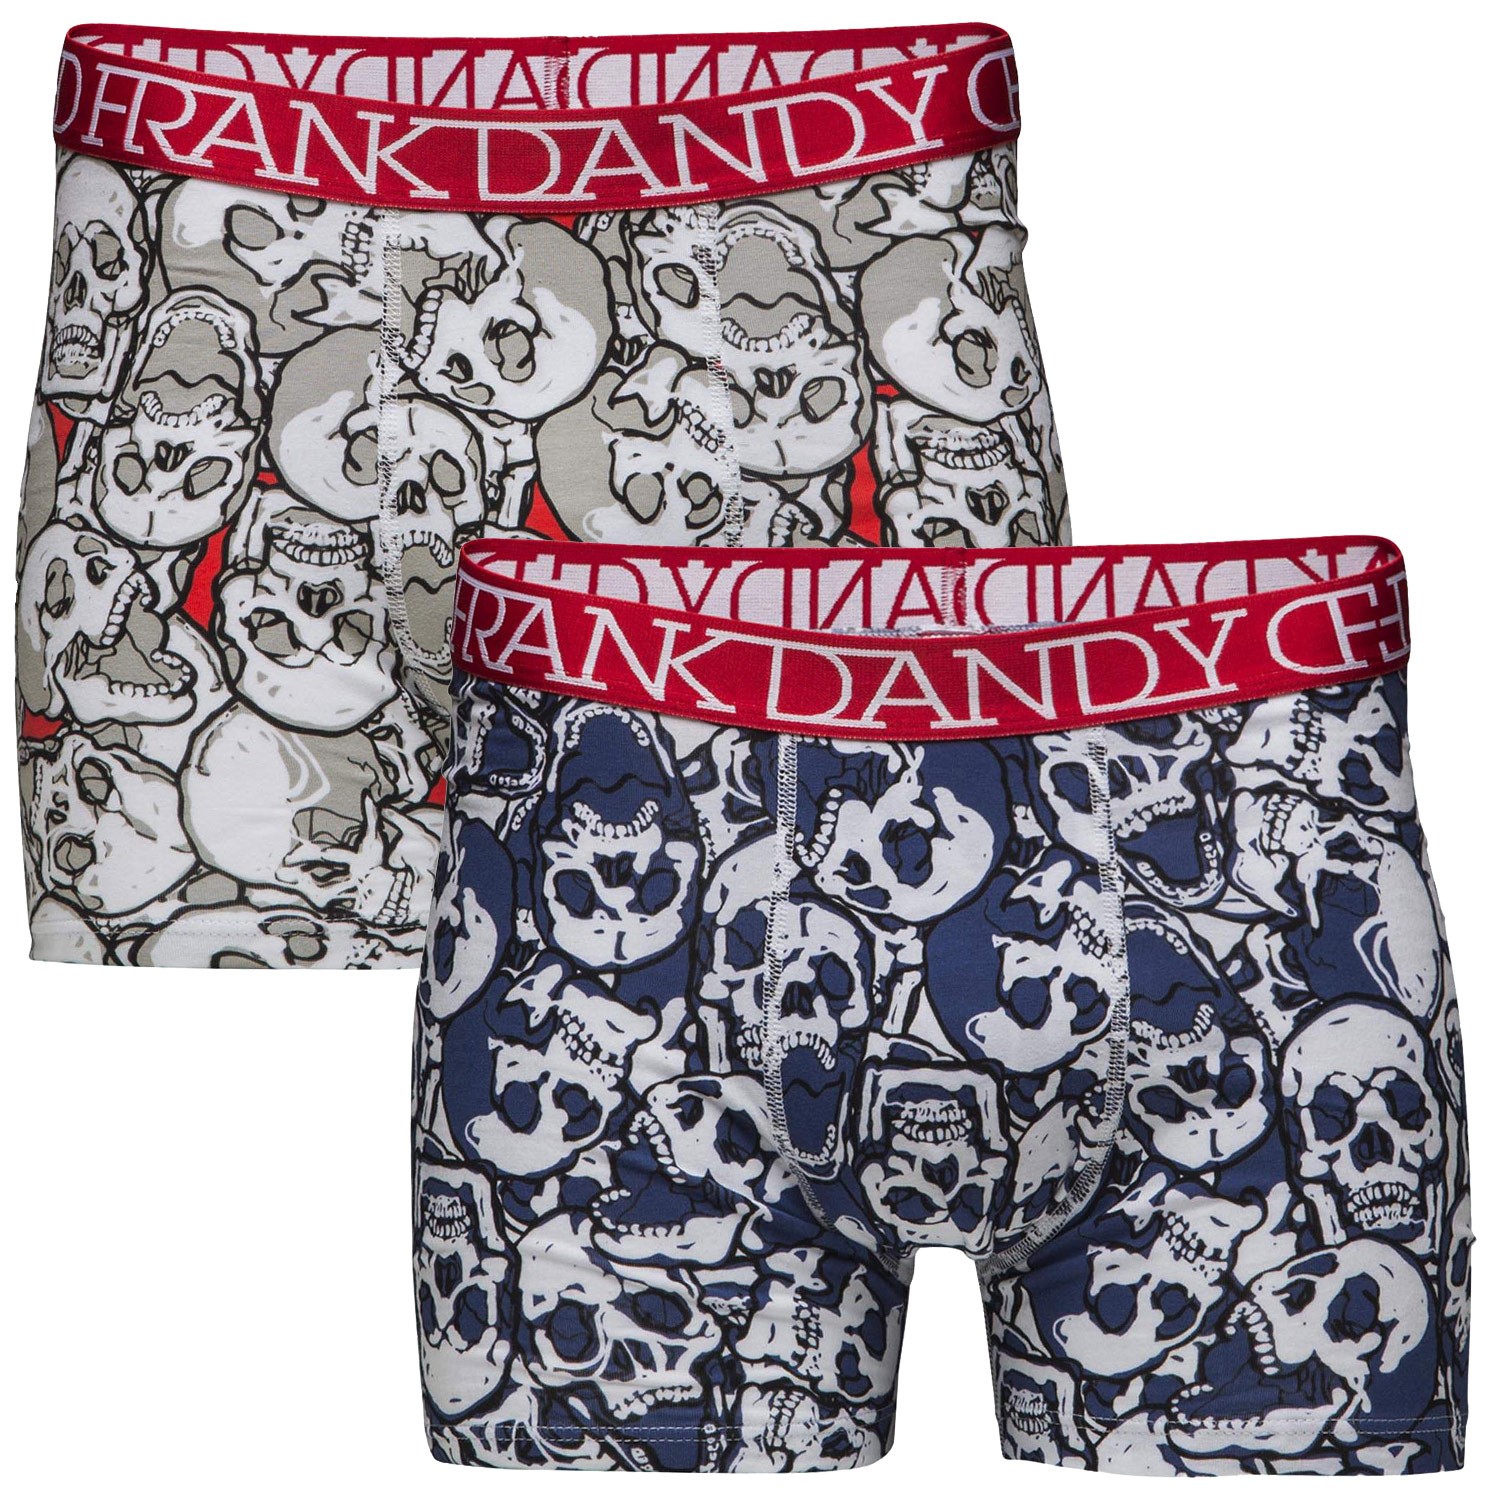 Frank Dandy Assorted Skulls Boxer